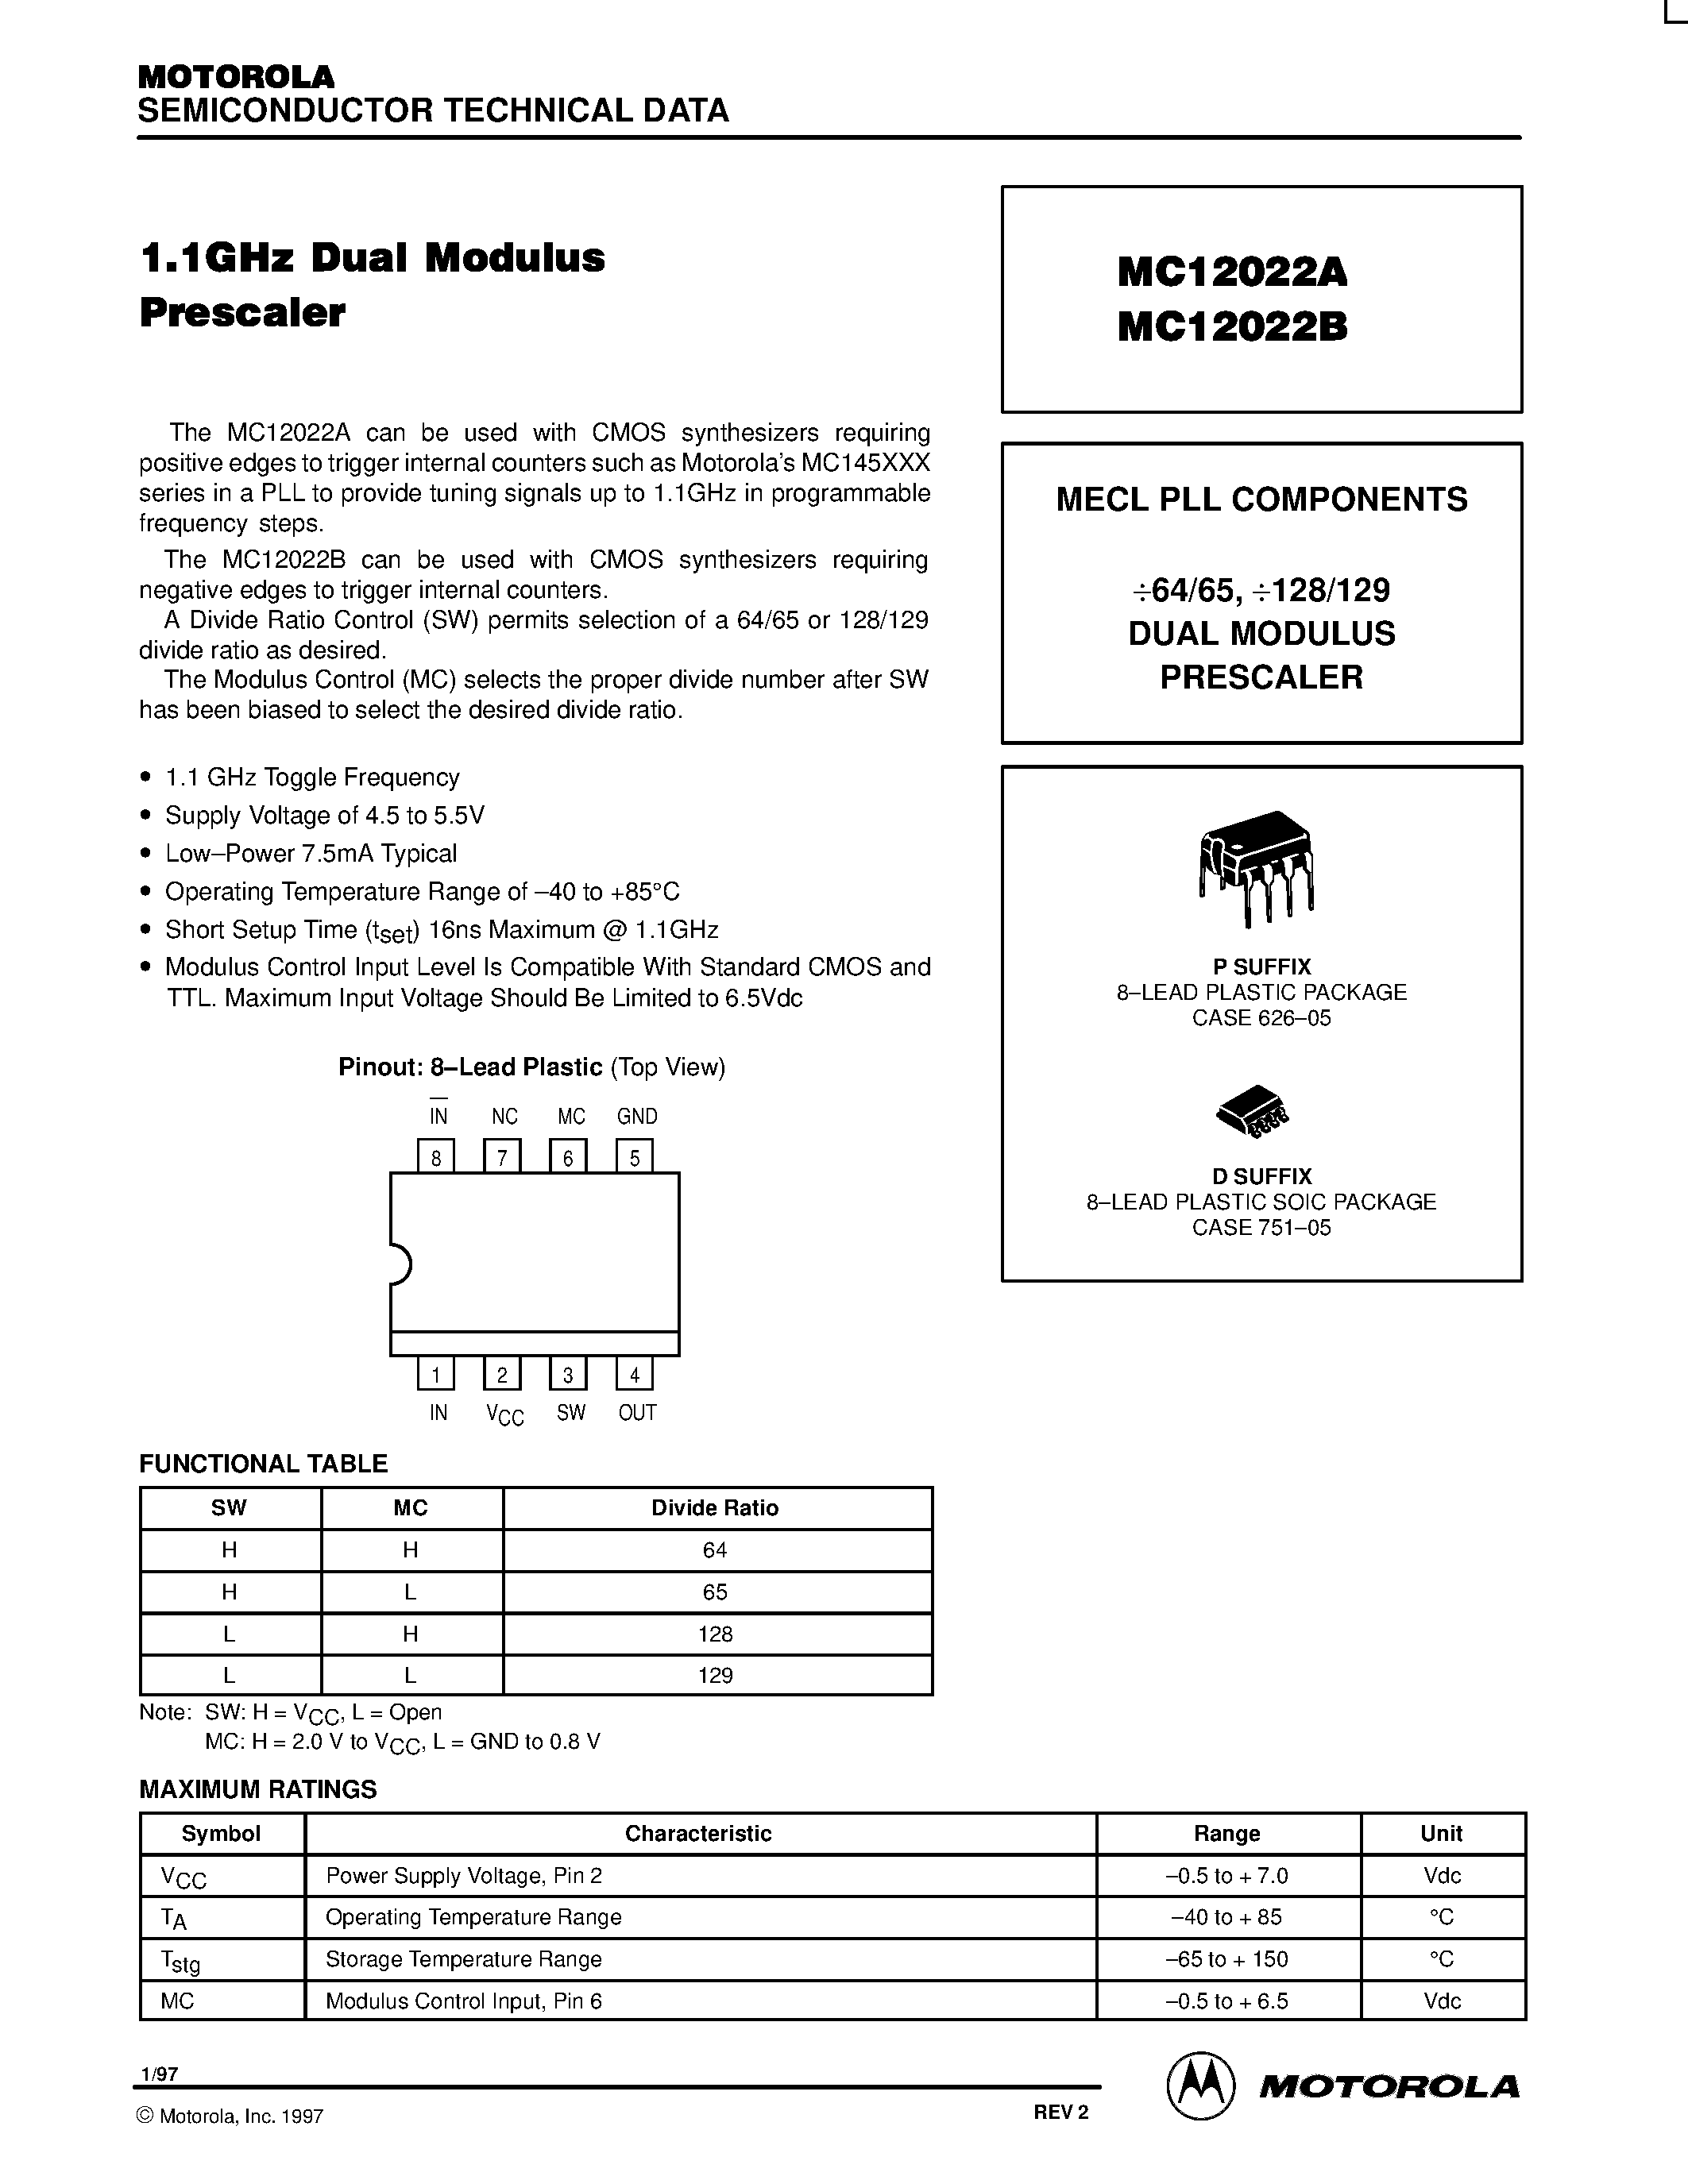 Datasheet MC12022A - (MC12022A / MC12022B) Dual Modulus Prescaler page 1